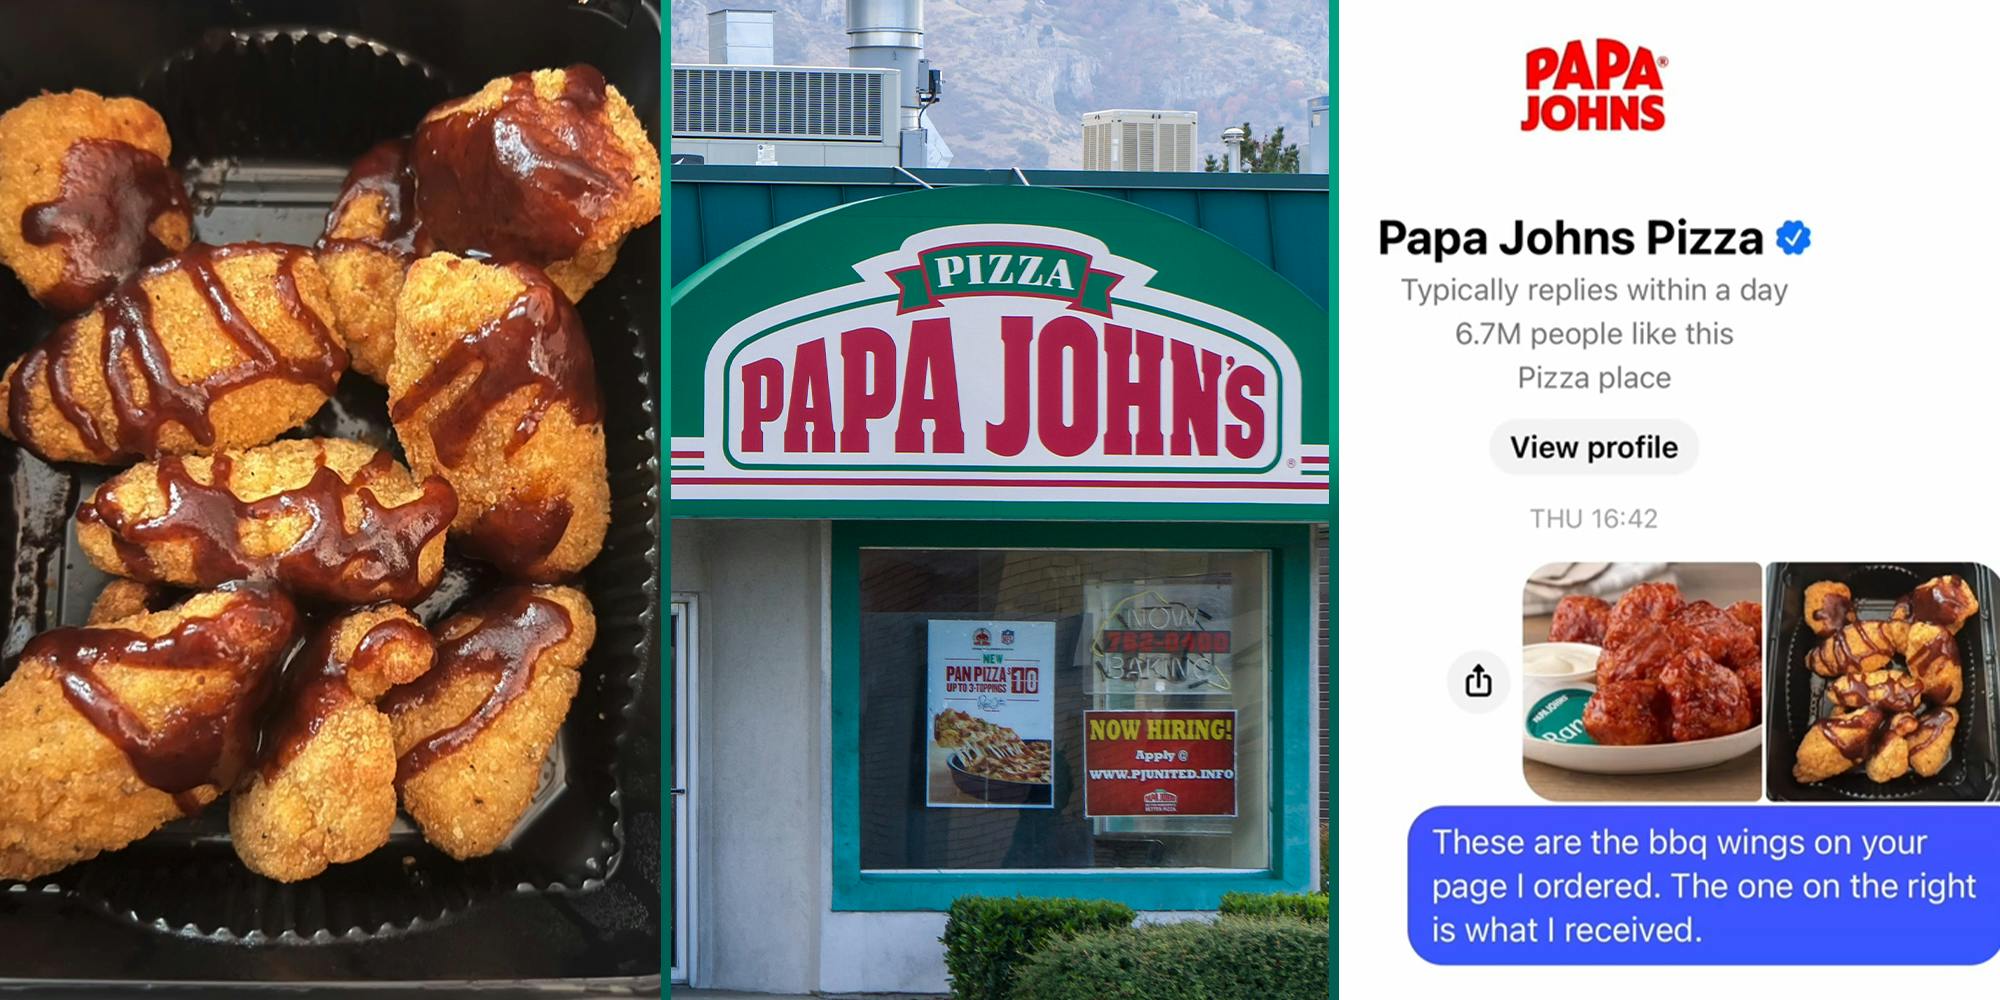 Customer blasts Papa John's for 'gaslighting' her about her boneless wings order